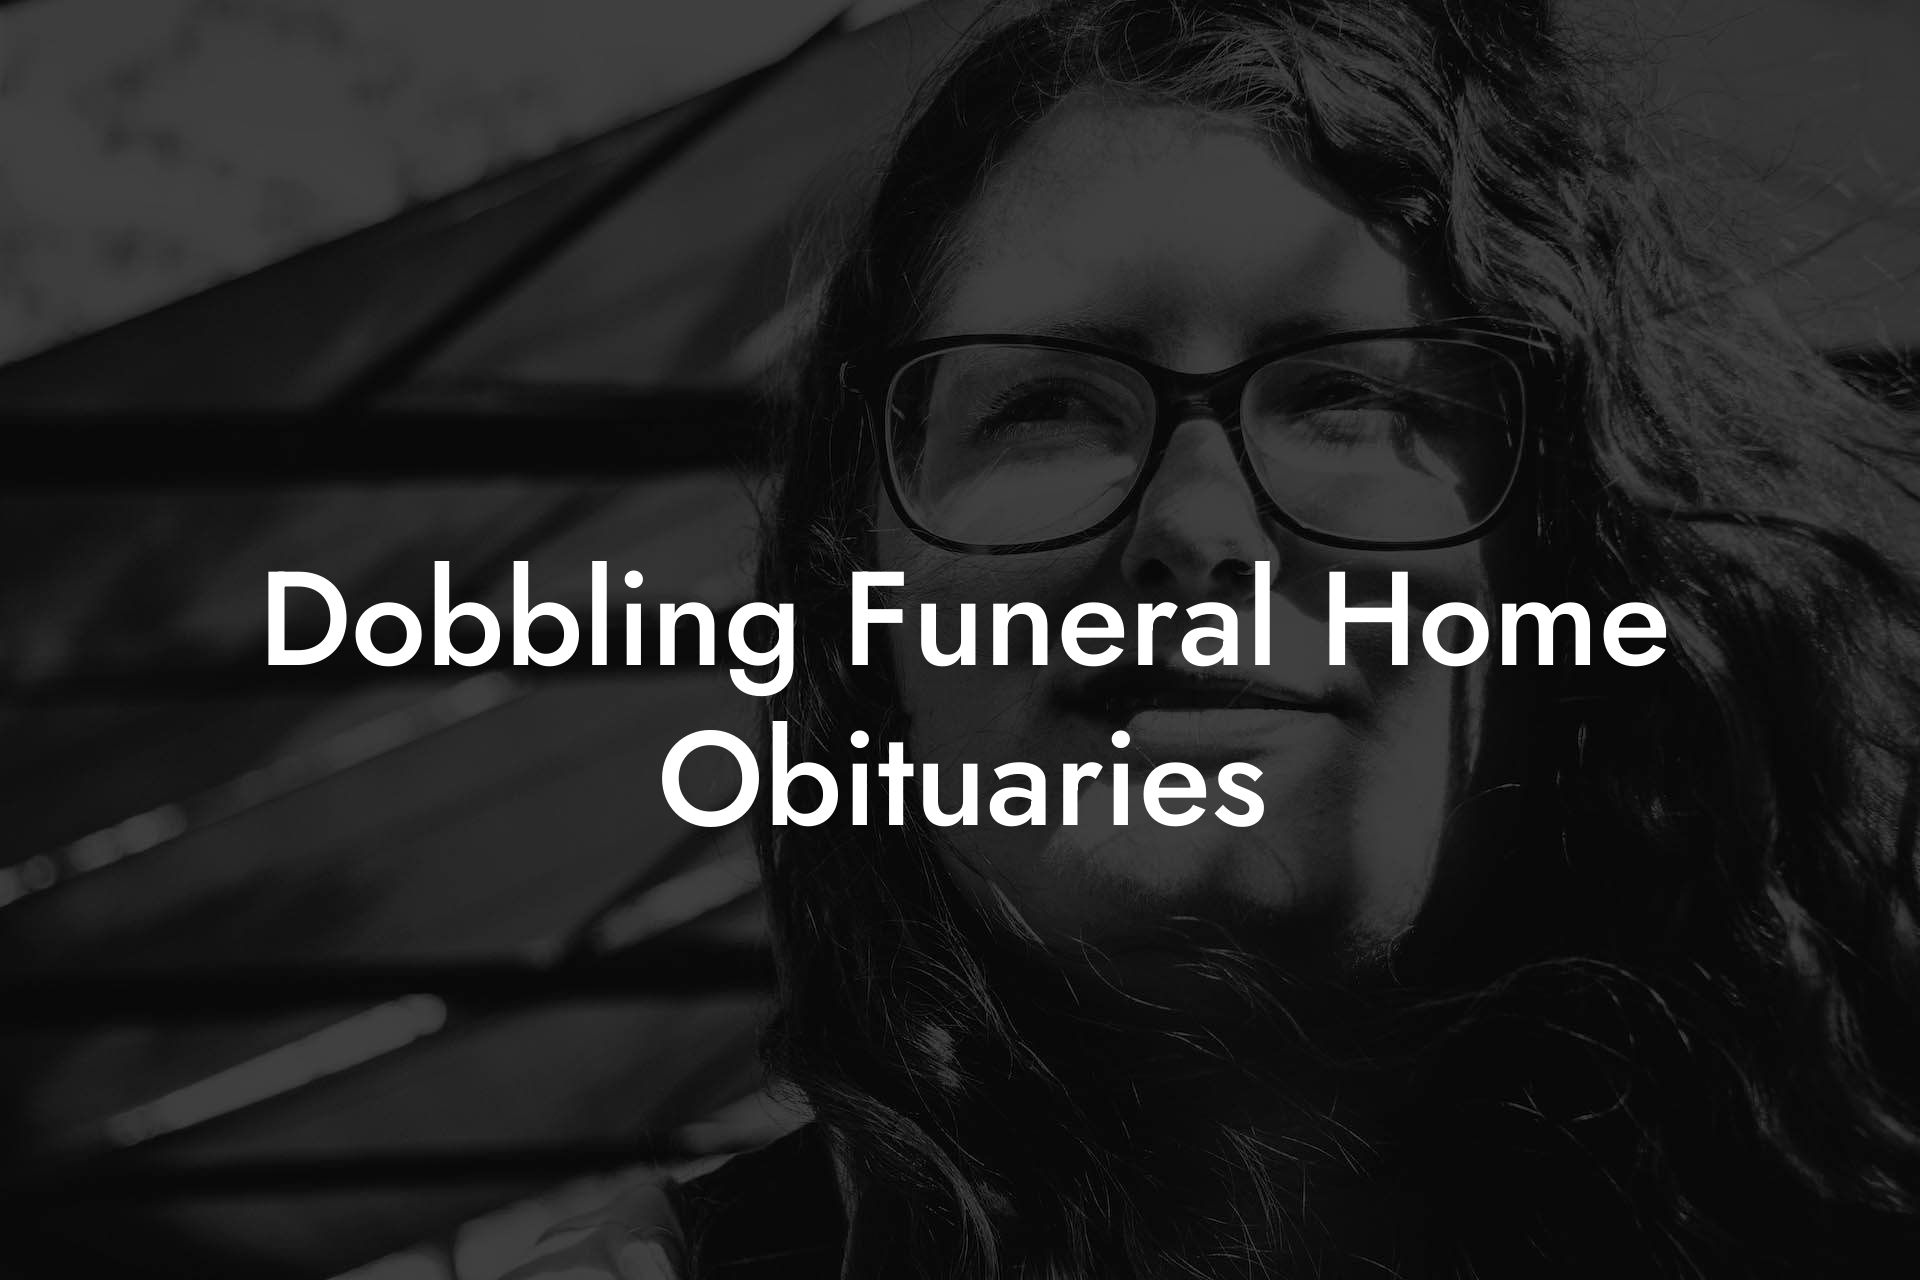 Dobbling Funeral Home Obituaries